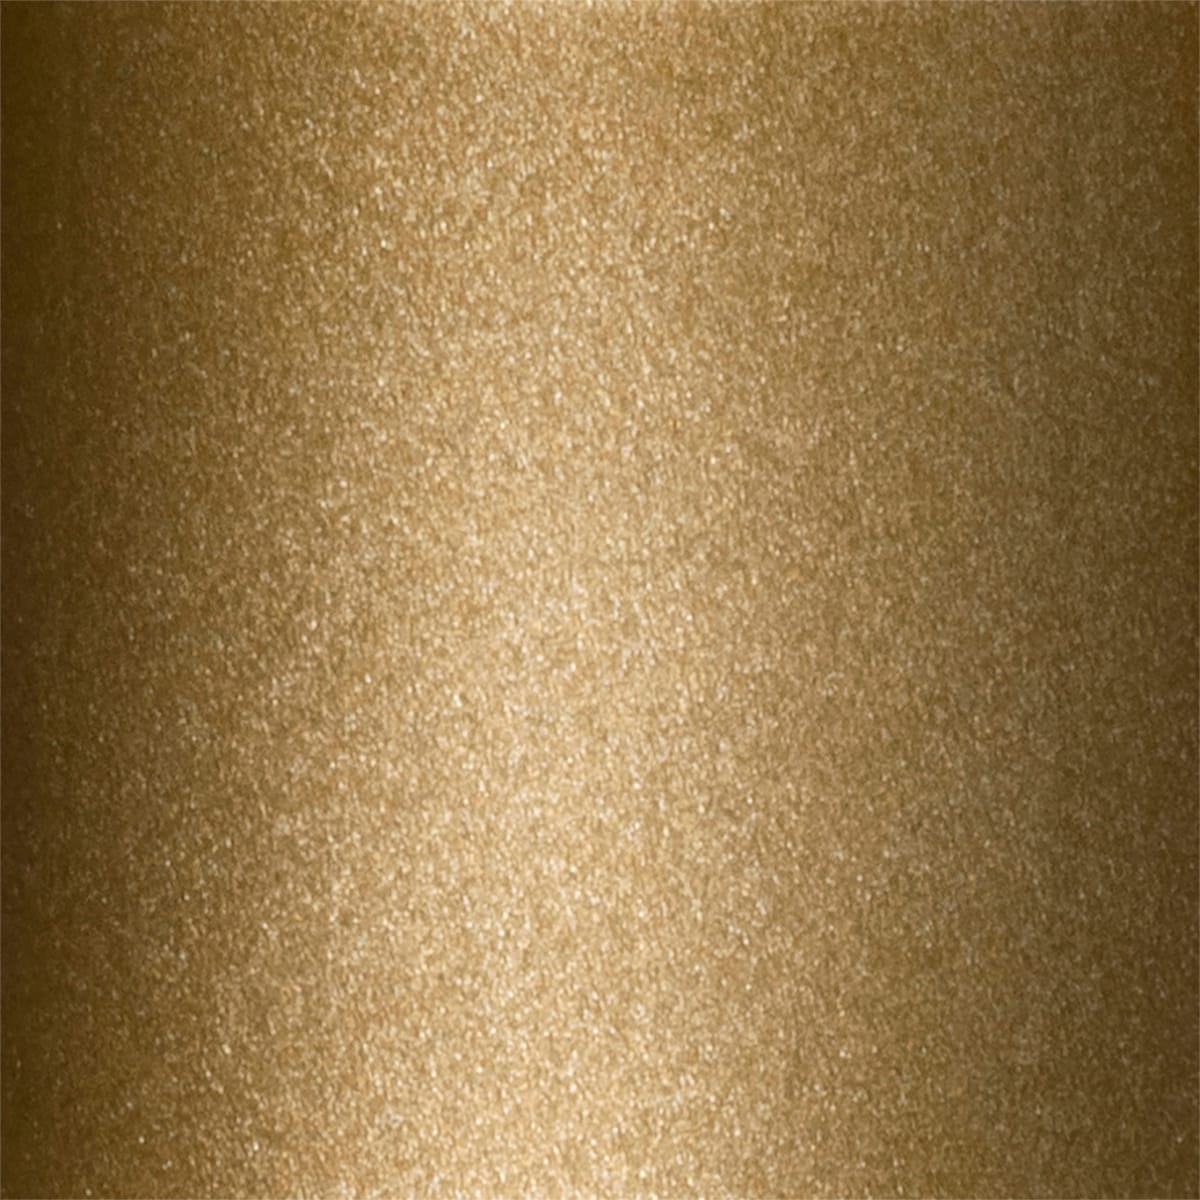 Rust-Oleum 11 oz. Gold Imagine Metallic Spray Paint 355100